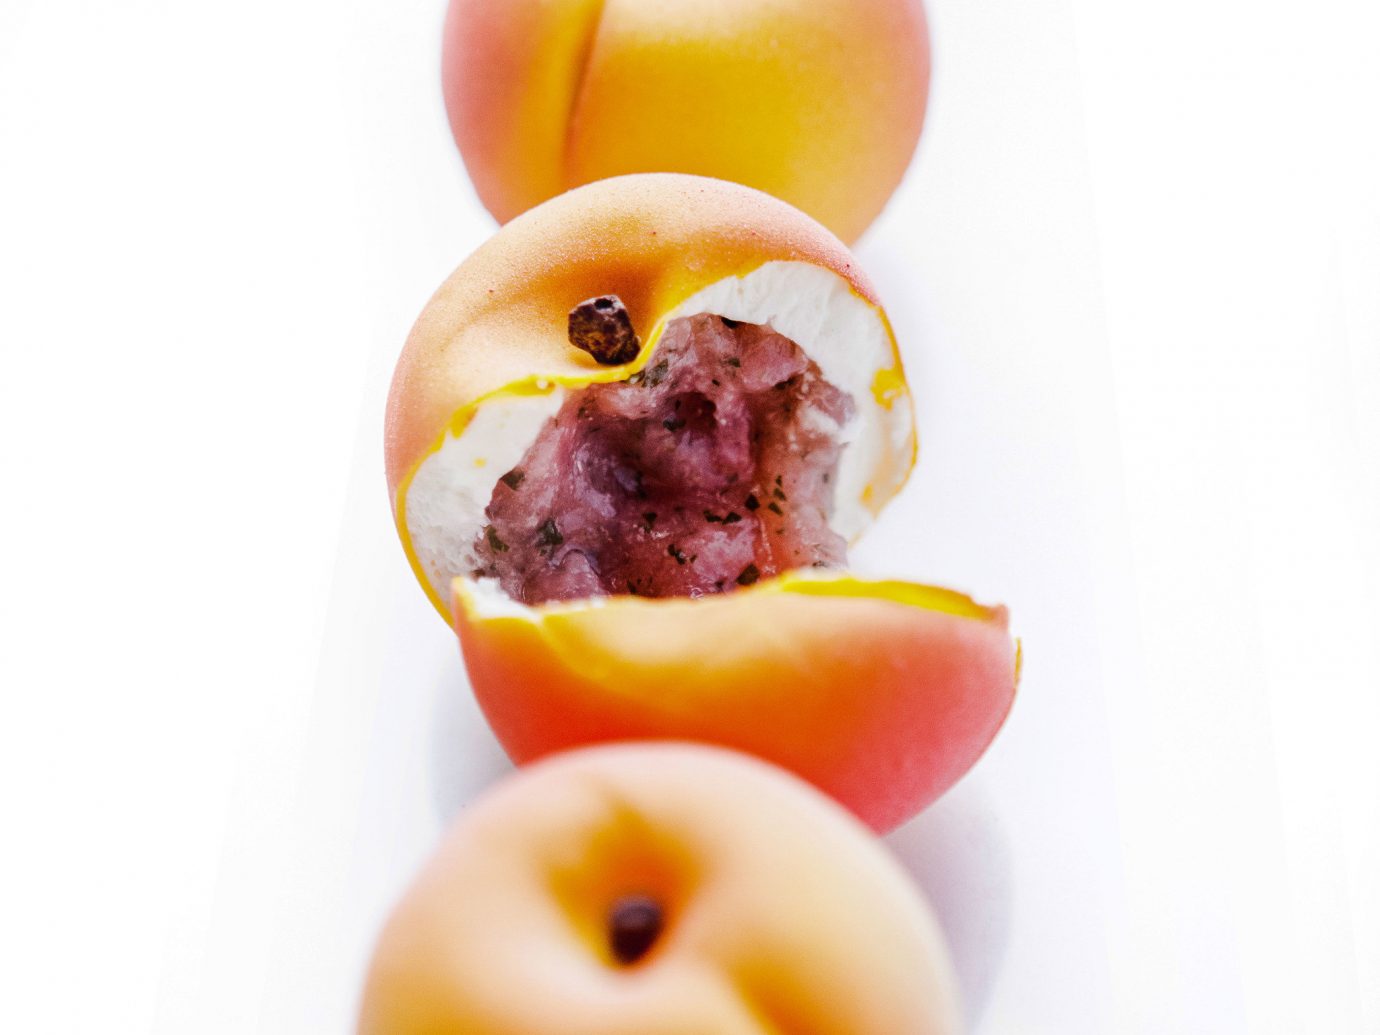 europe Trip Ideas fruit food produce peach sliced donut apricot